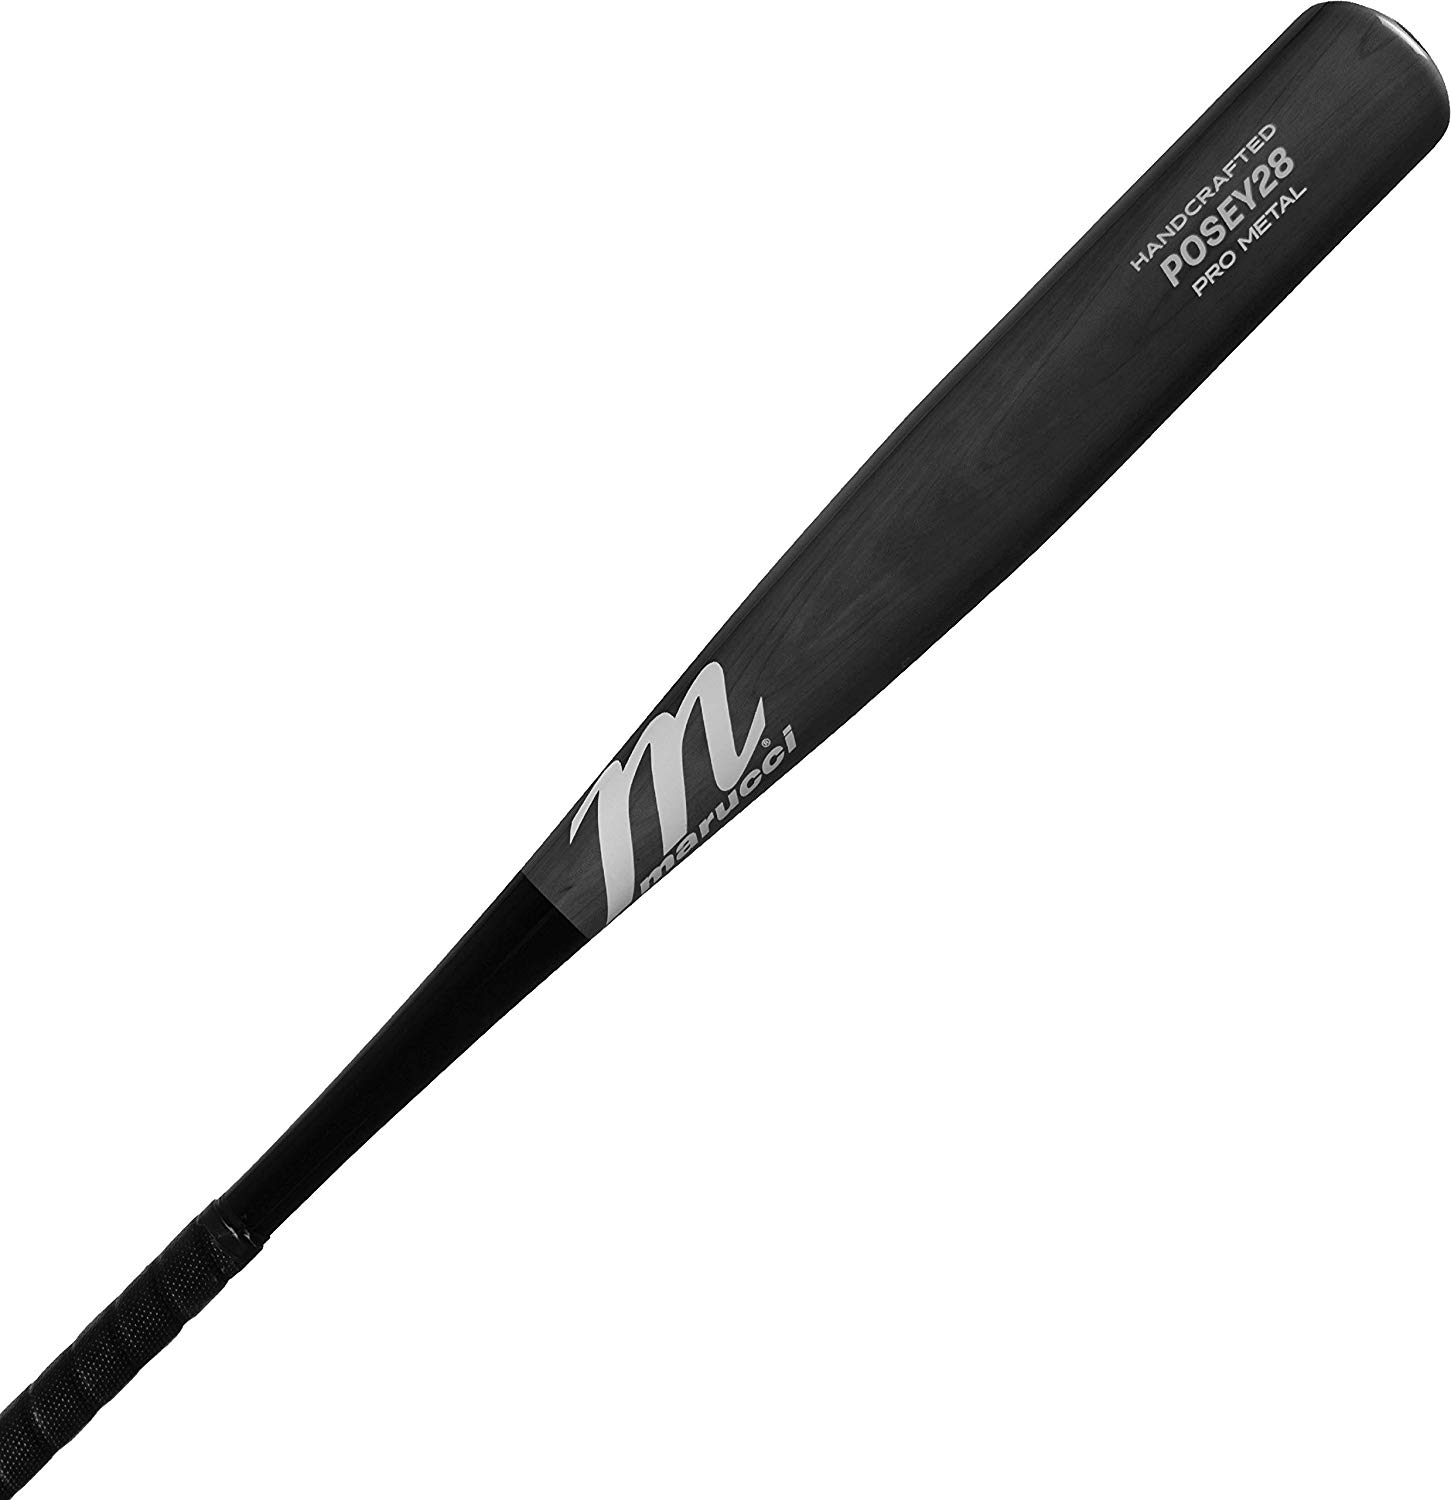 marucci-posey28-pro-metal-bbcor-baseball-bat-mcbp28s-31-inch-28-oz MCBP28S-3128 Marucci 840058701371 AZ105 alloy the strongest aluminum on the Marucci bat line allows